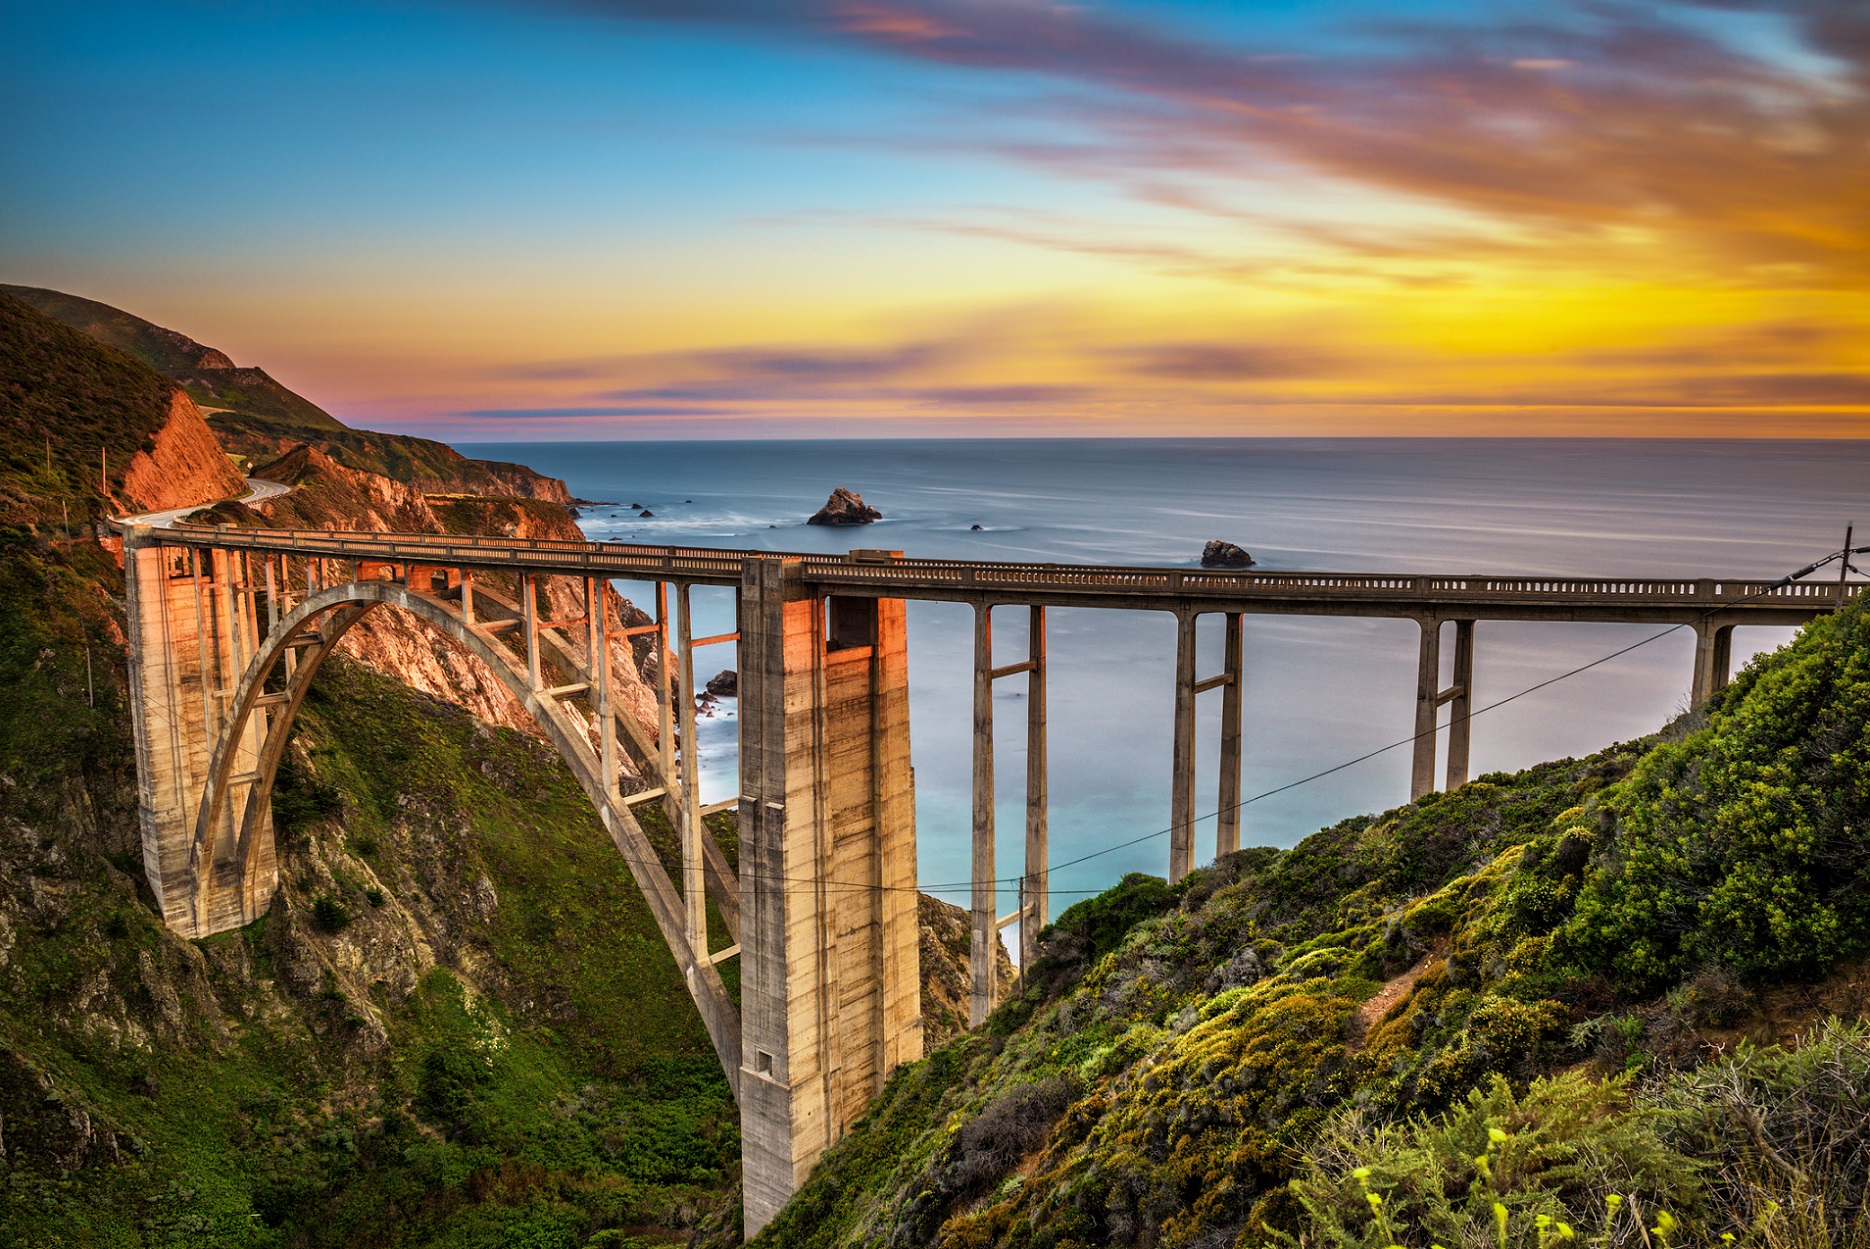 Monterey  - Bixby Bridge and Pacific Coast Highway at sunset